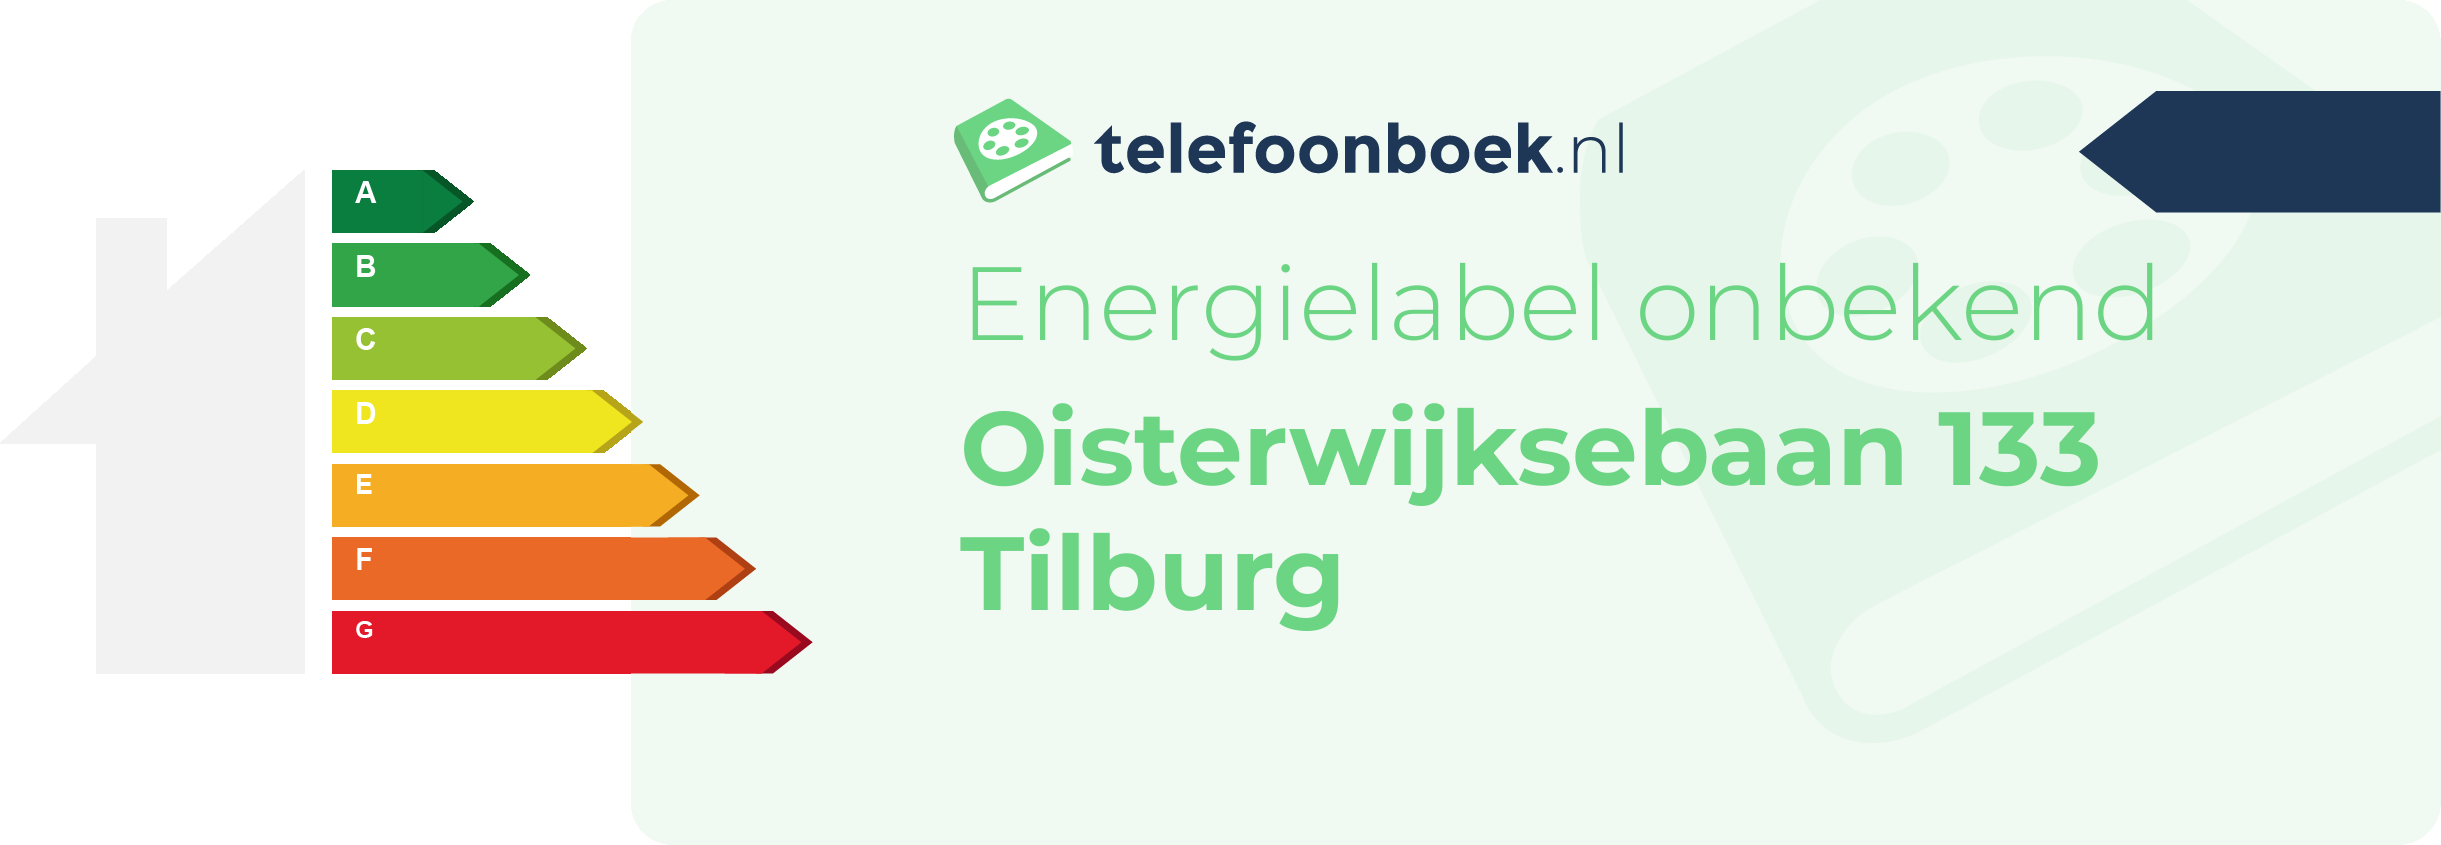 Energielabel Oisterwijksebaan 133 Tilburg